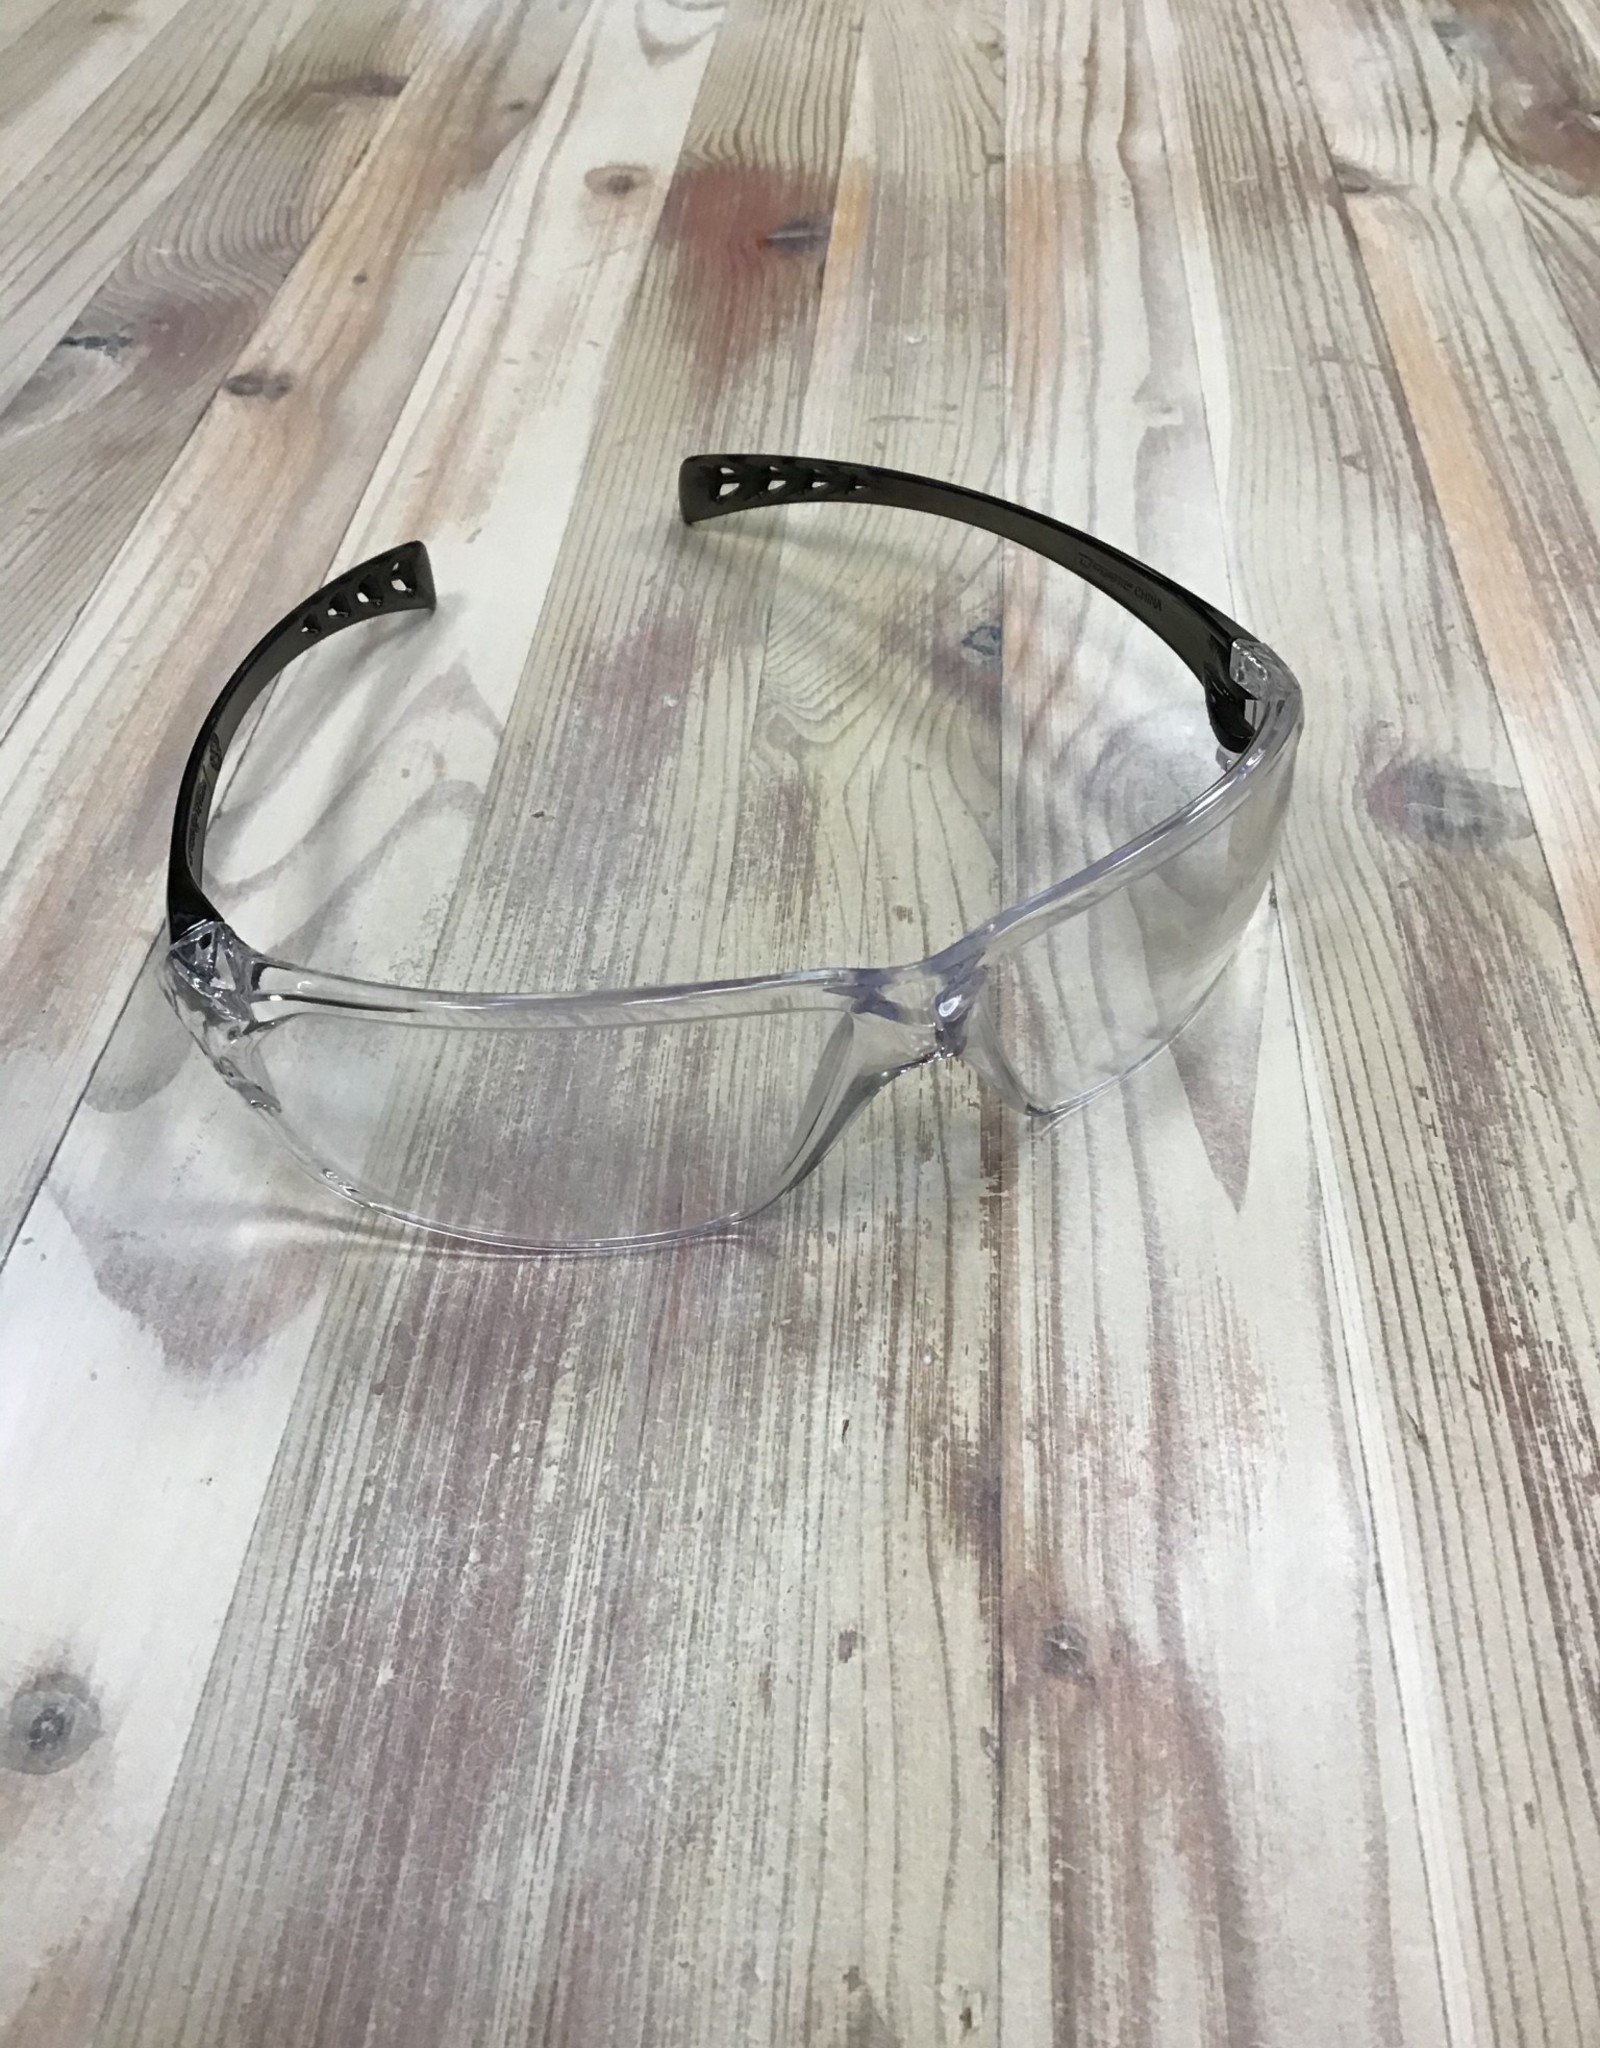 Dynamic Dynamic Safety Glasses